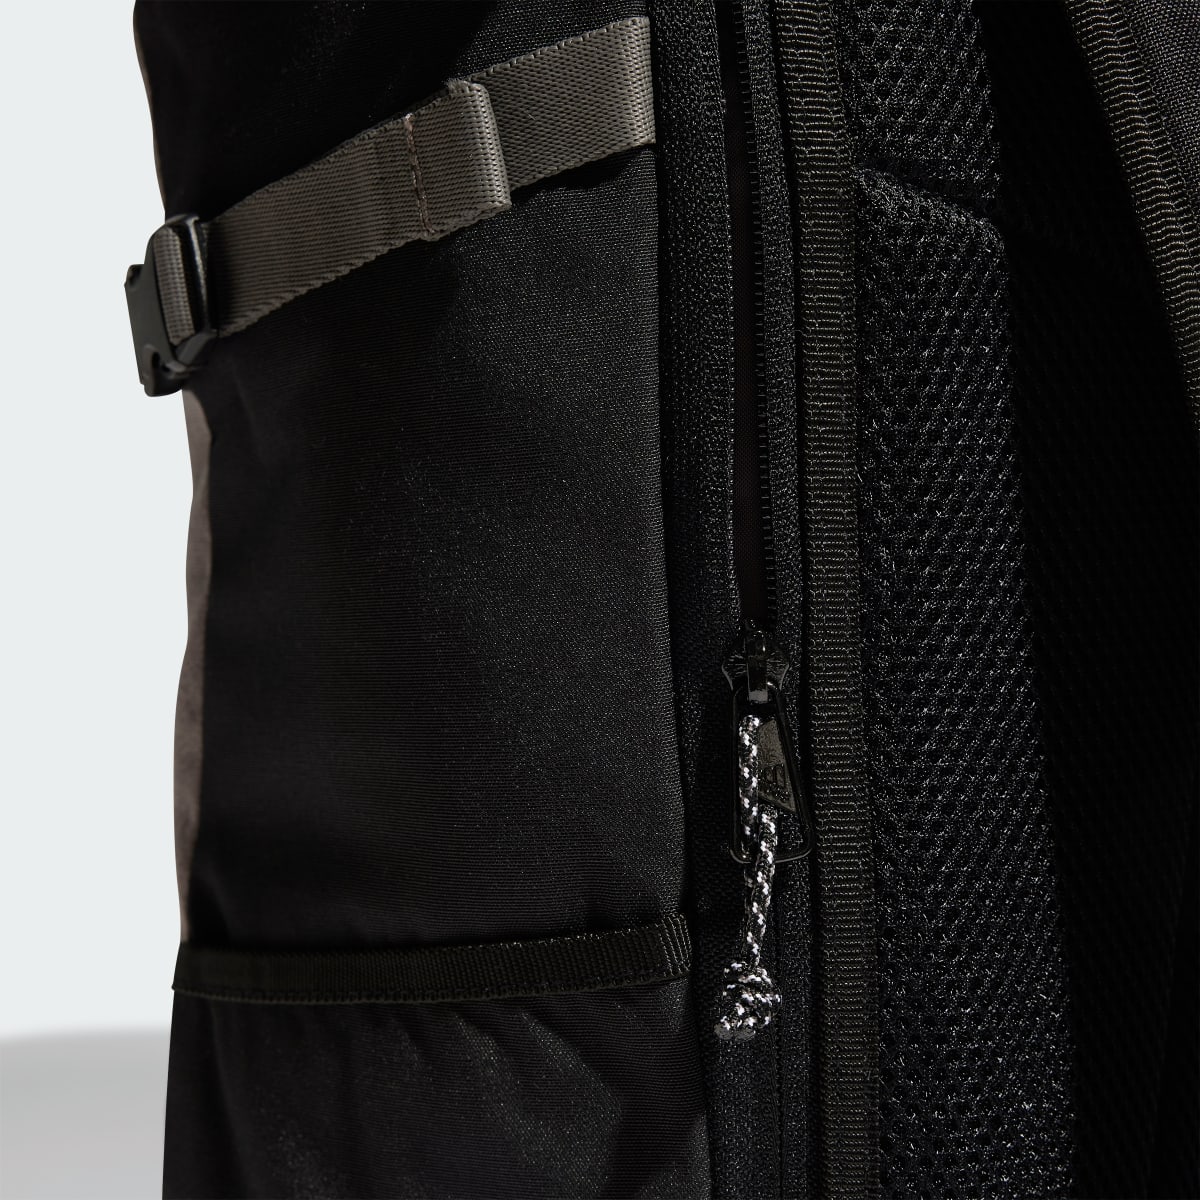 Adidas Xplorer Backpack. 6